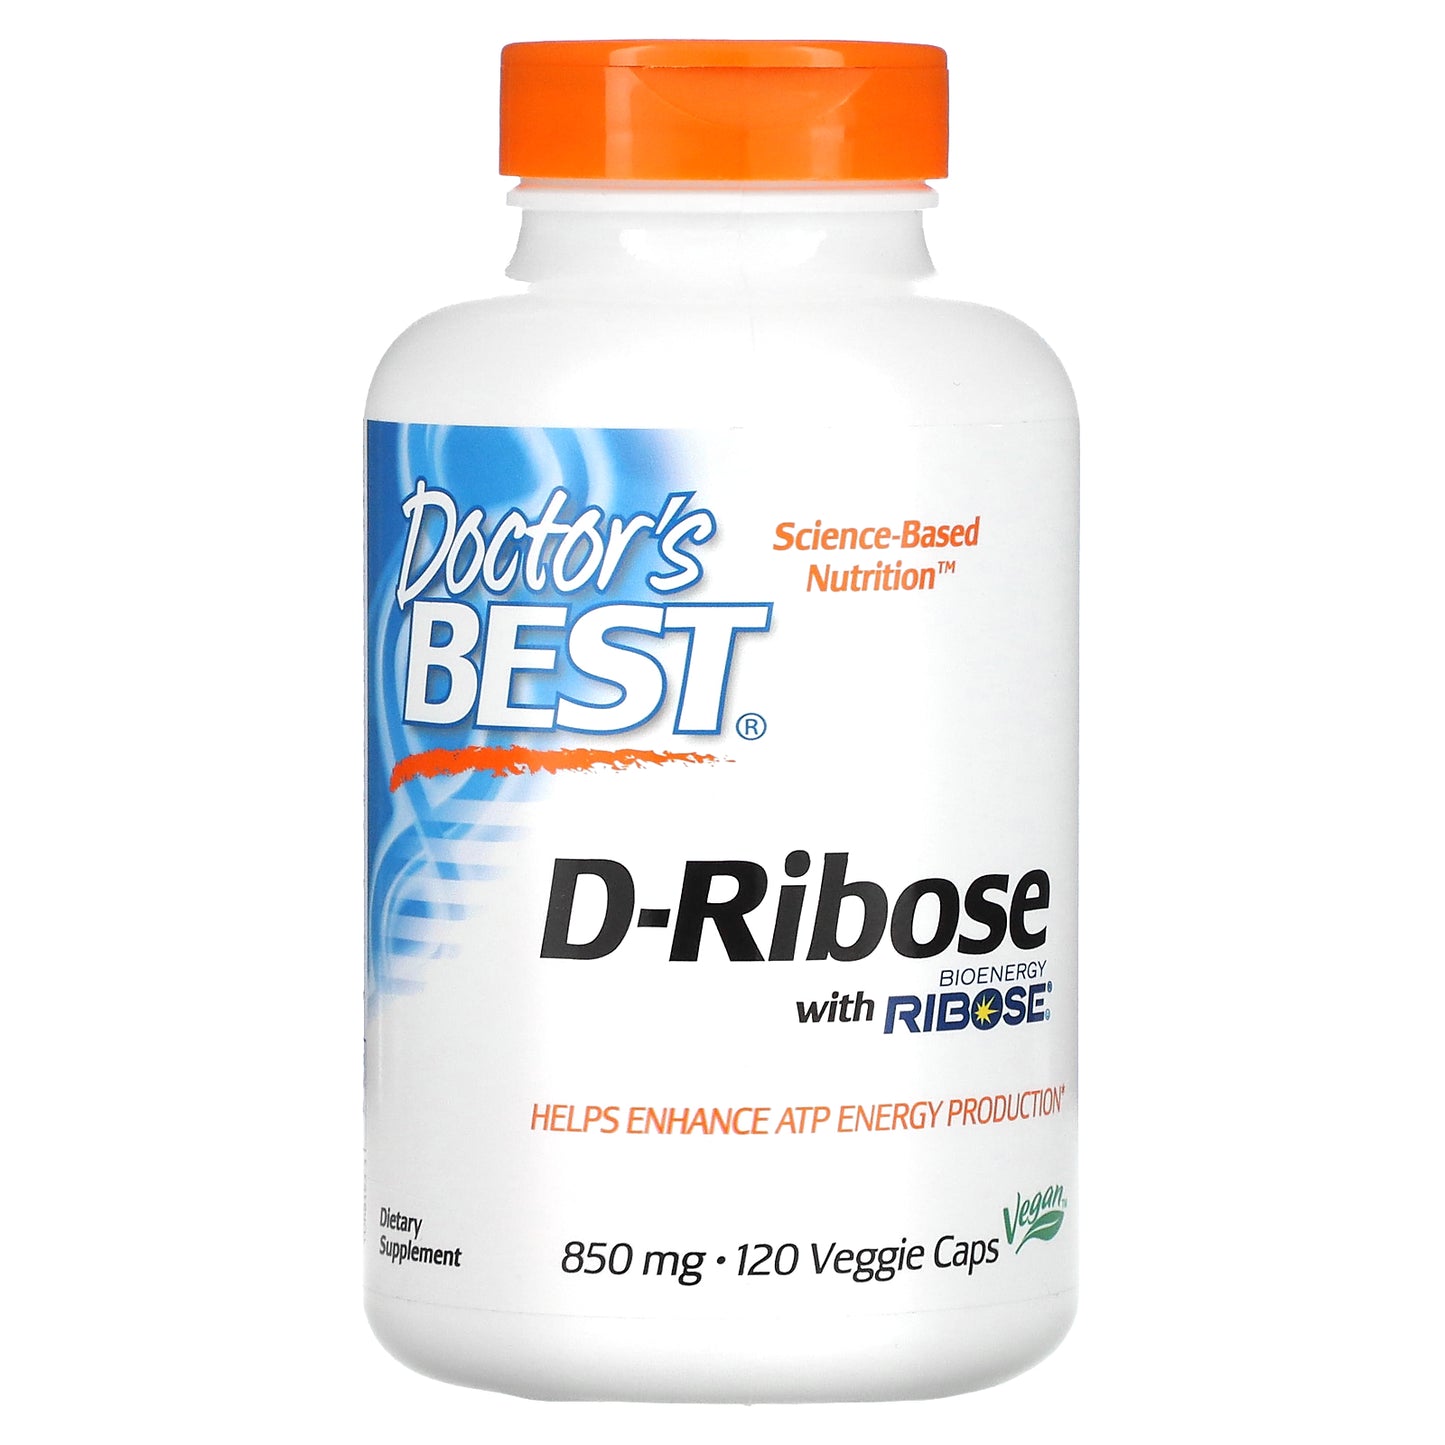 Doctor's Best D-Ribose with BioEnergy Ribose, 850 mg, 120 Veggie Caps